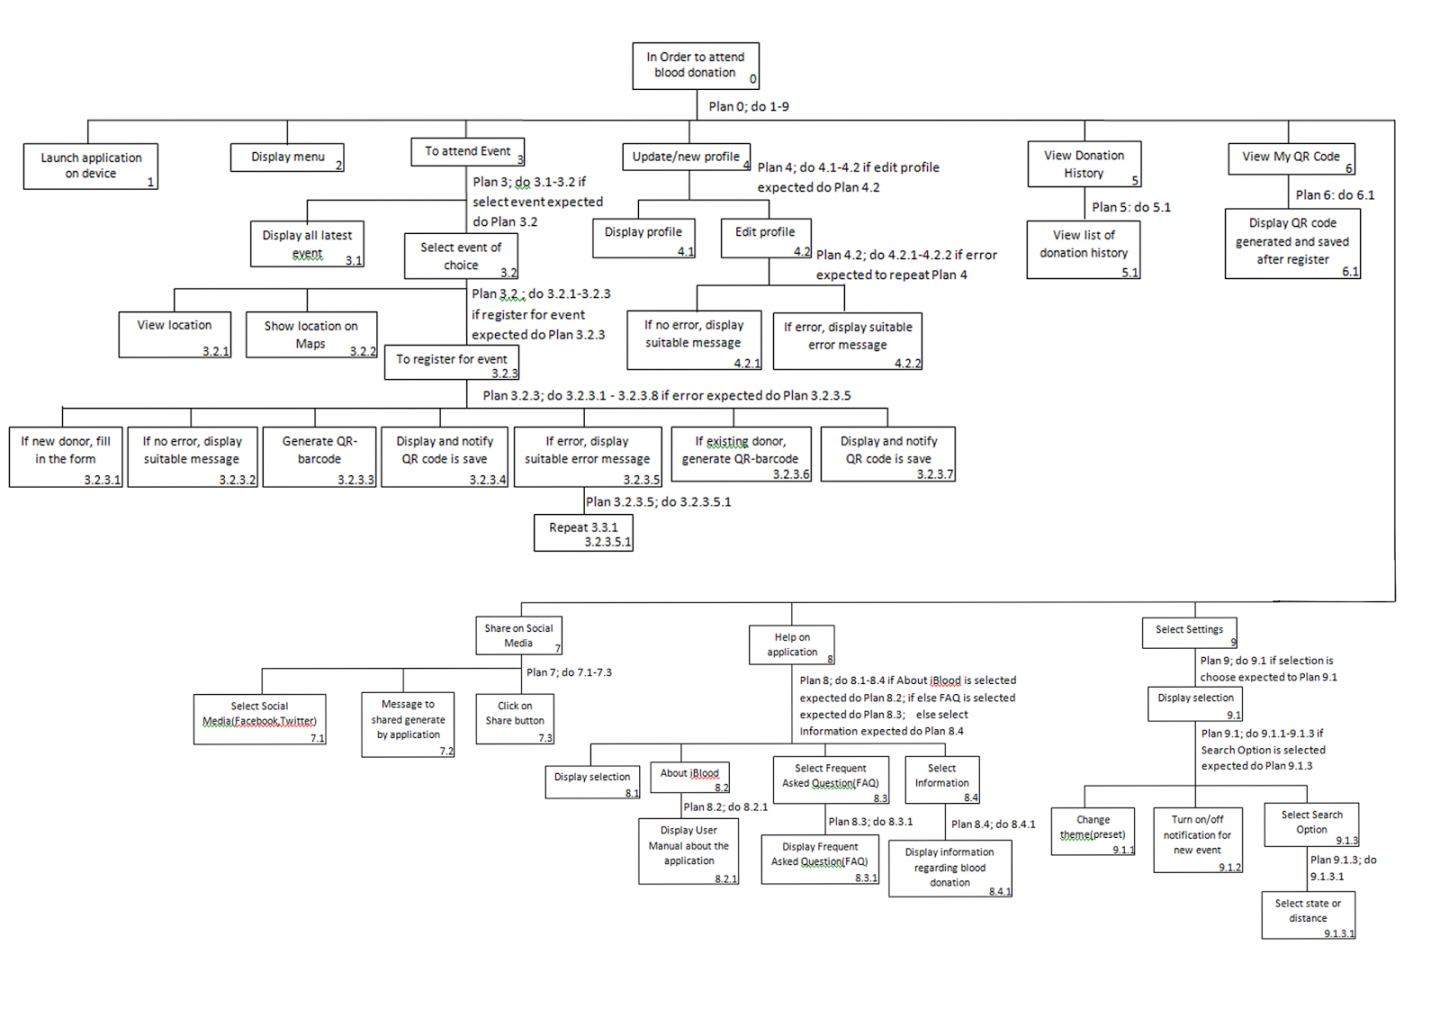 free hierarchical task analysis hta ~ hci projectiblood hierarchical task analysis template